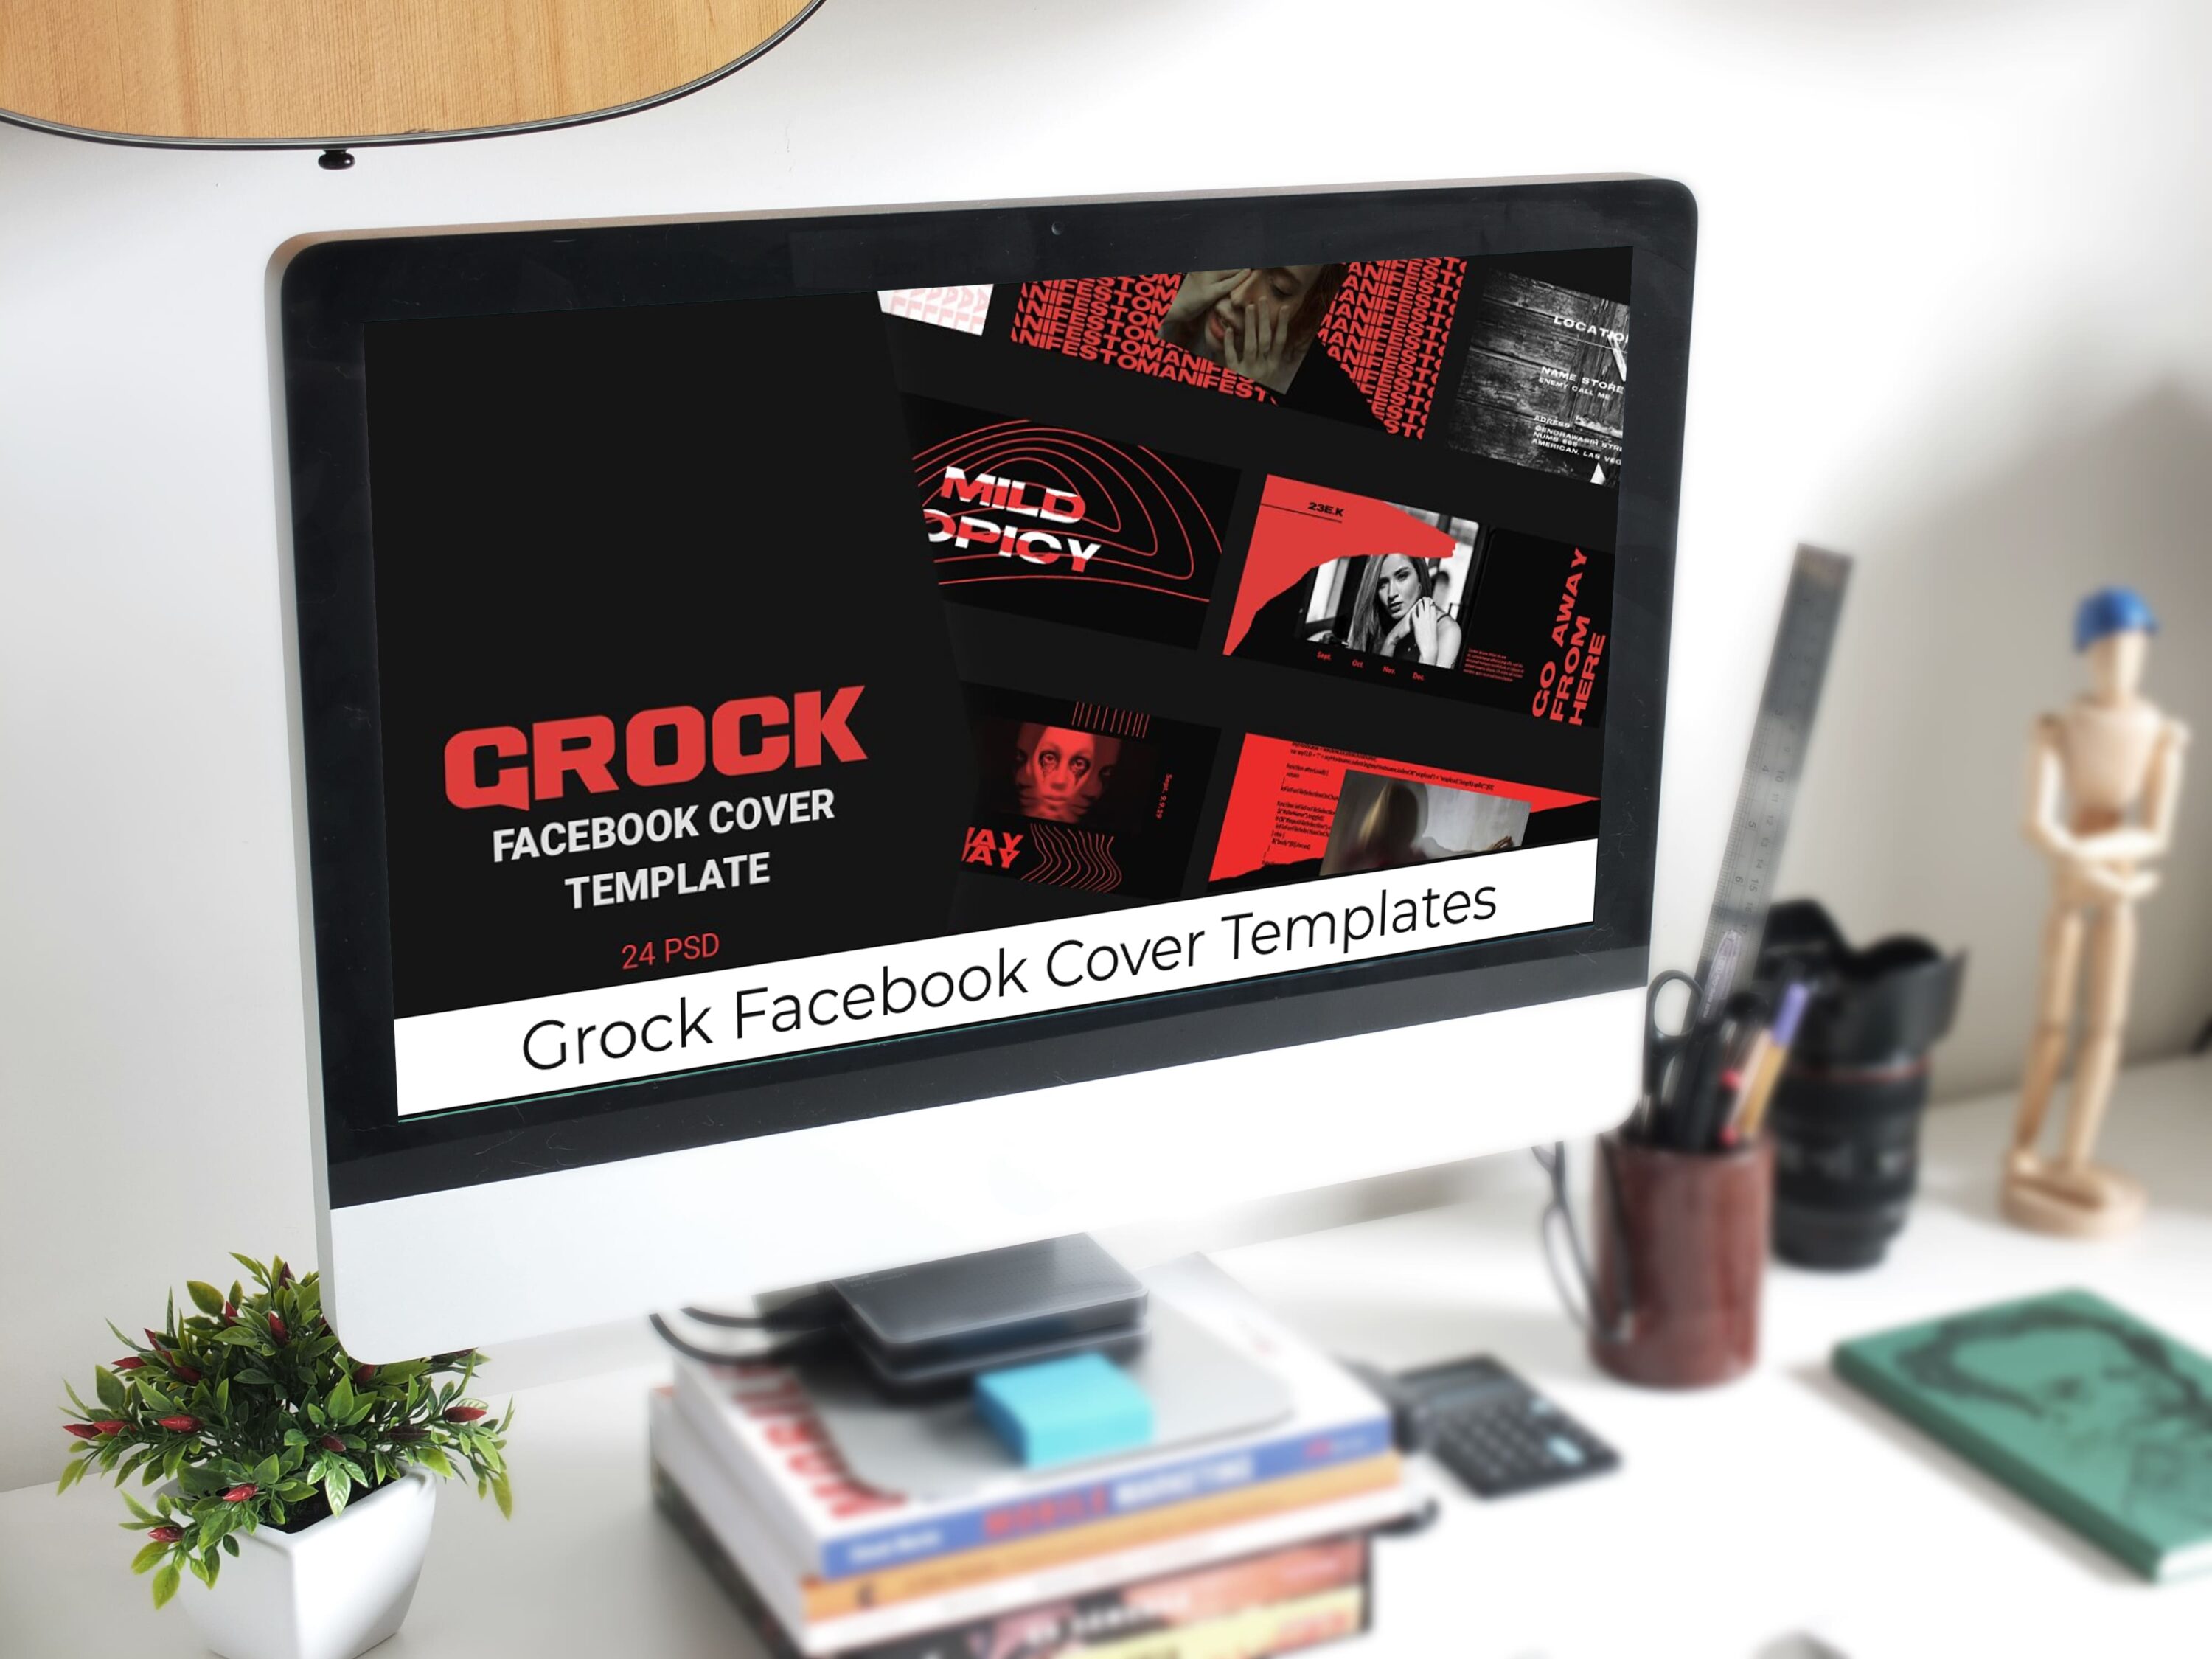 Desktop option of the Grock Facebook Cover Templates.